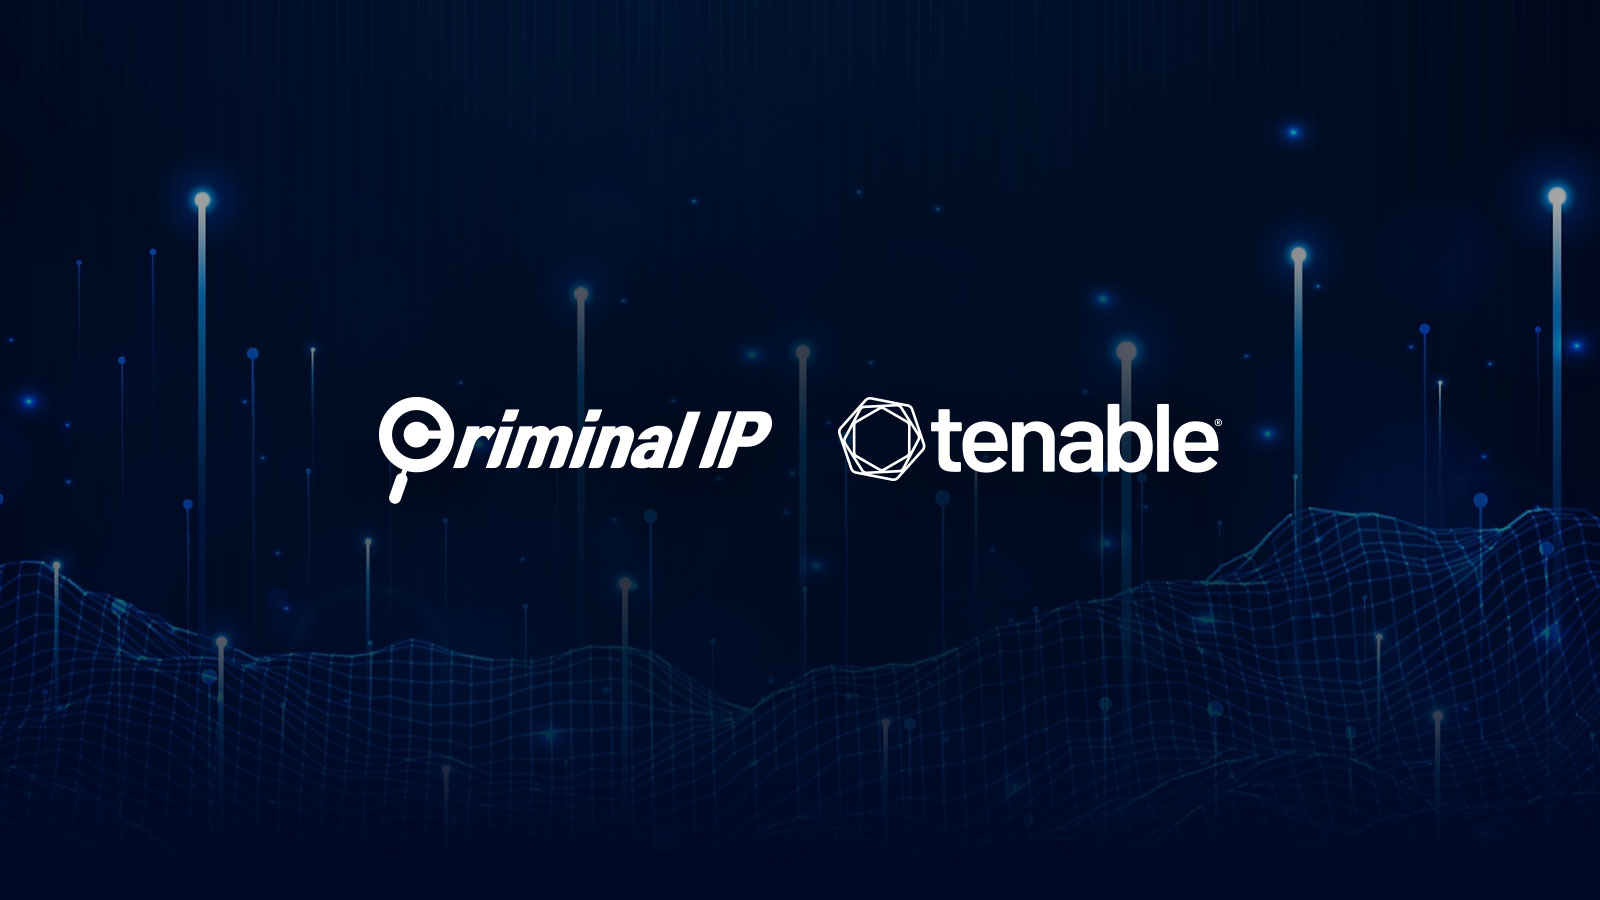 Criminal IP + Tenable